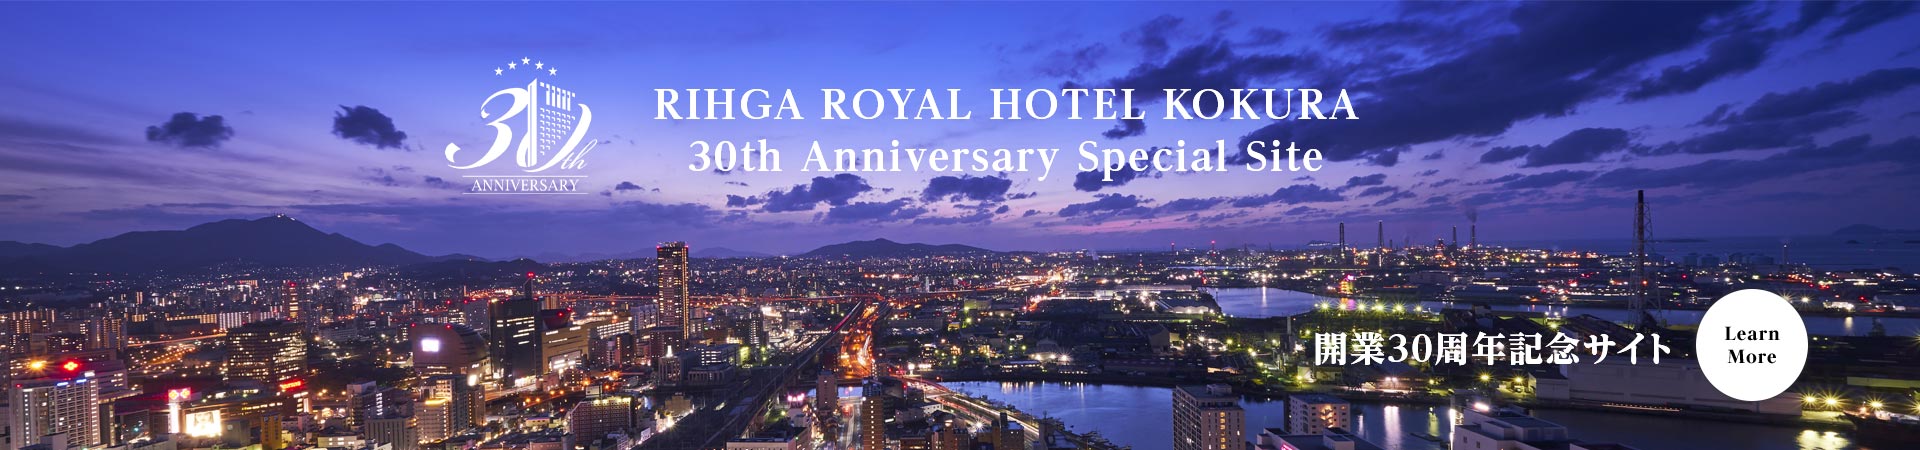 RIHGA ROYAL HOTEL KOKURA 30th Anniversary Special Site